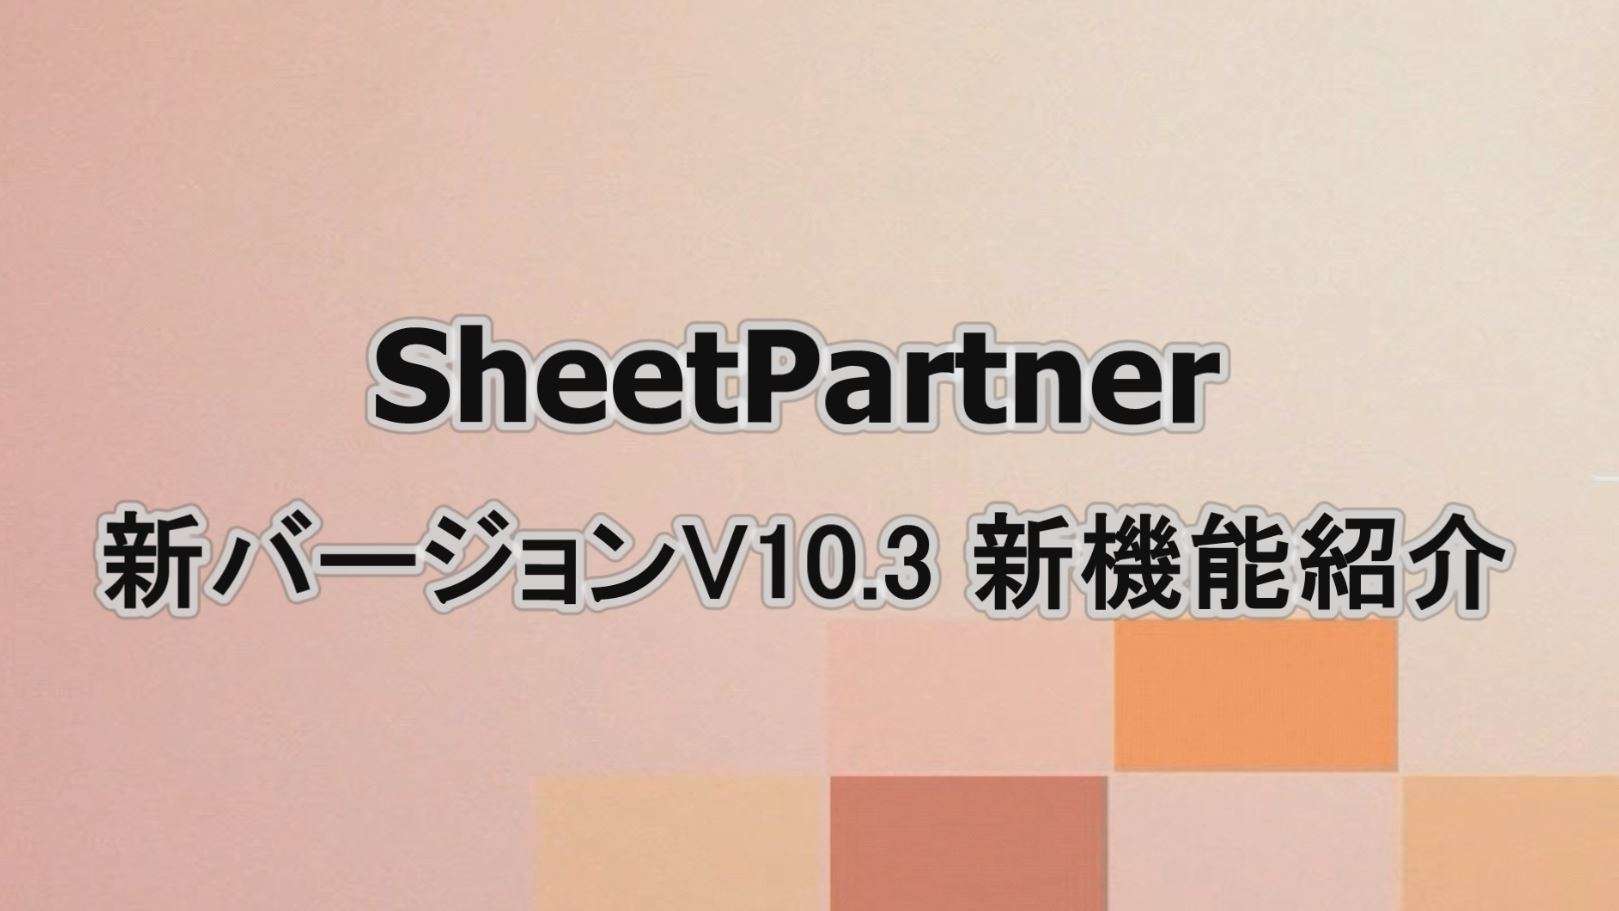 SheetPartner 新バージョンアップ